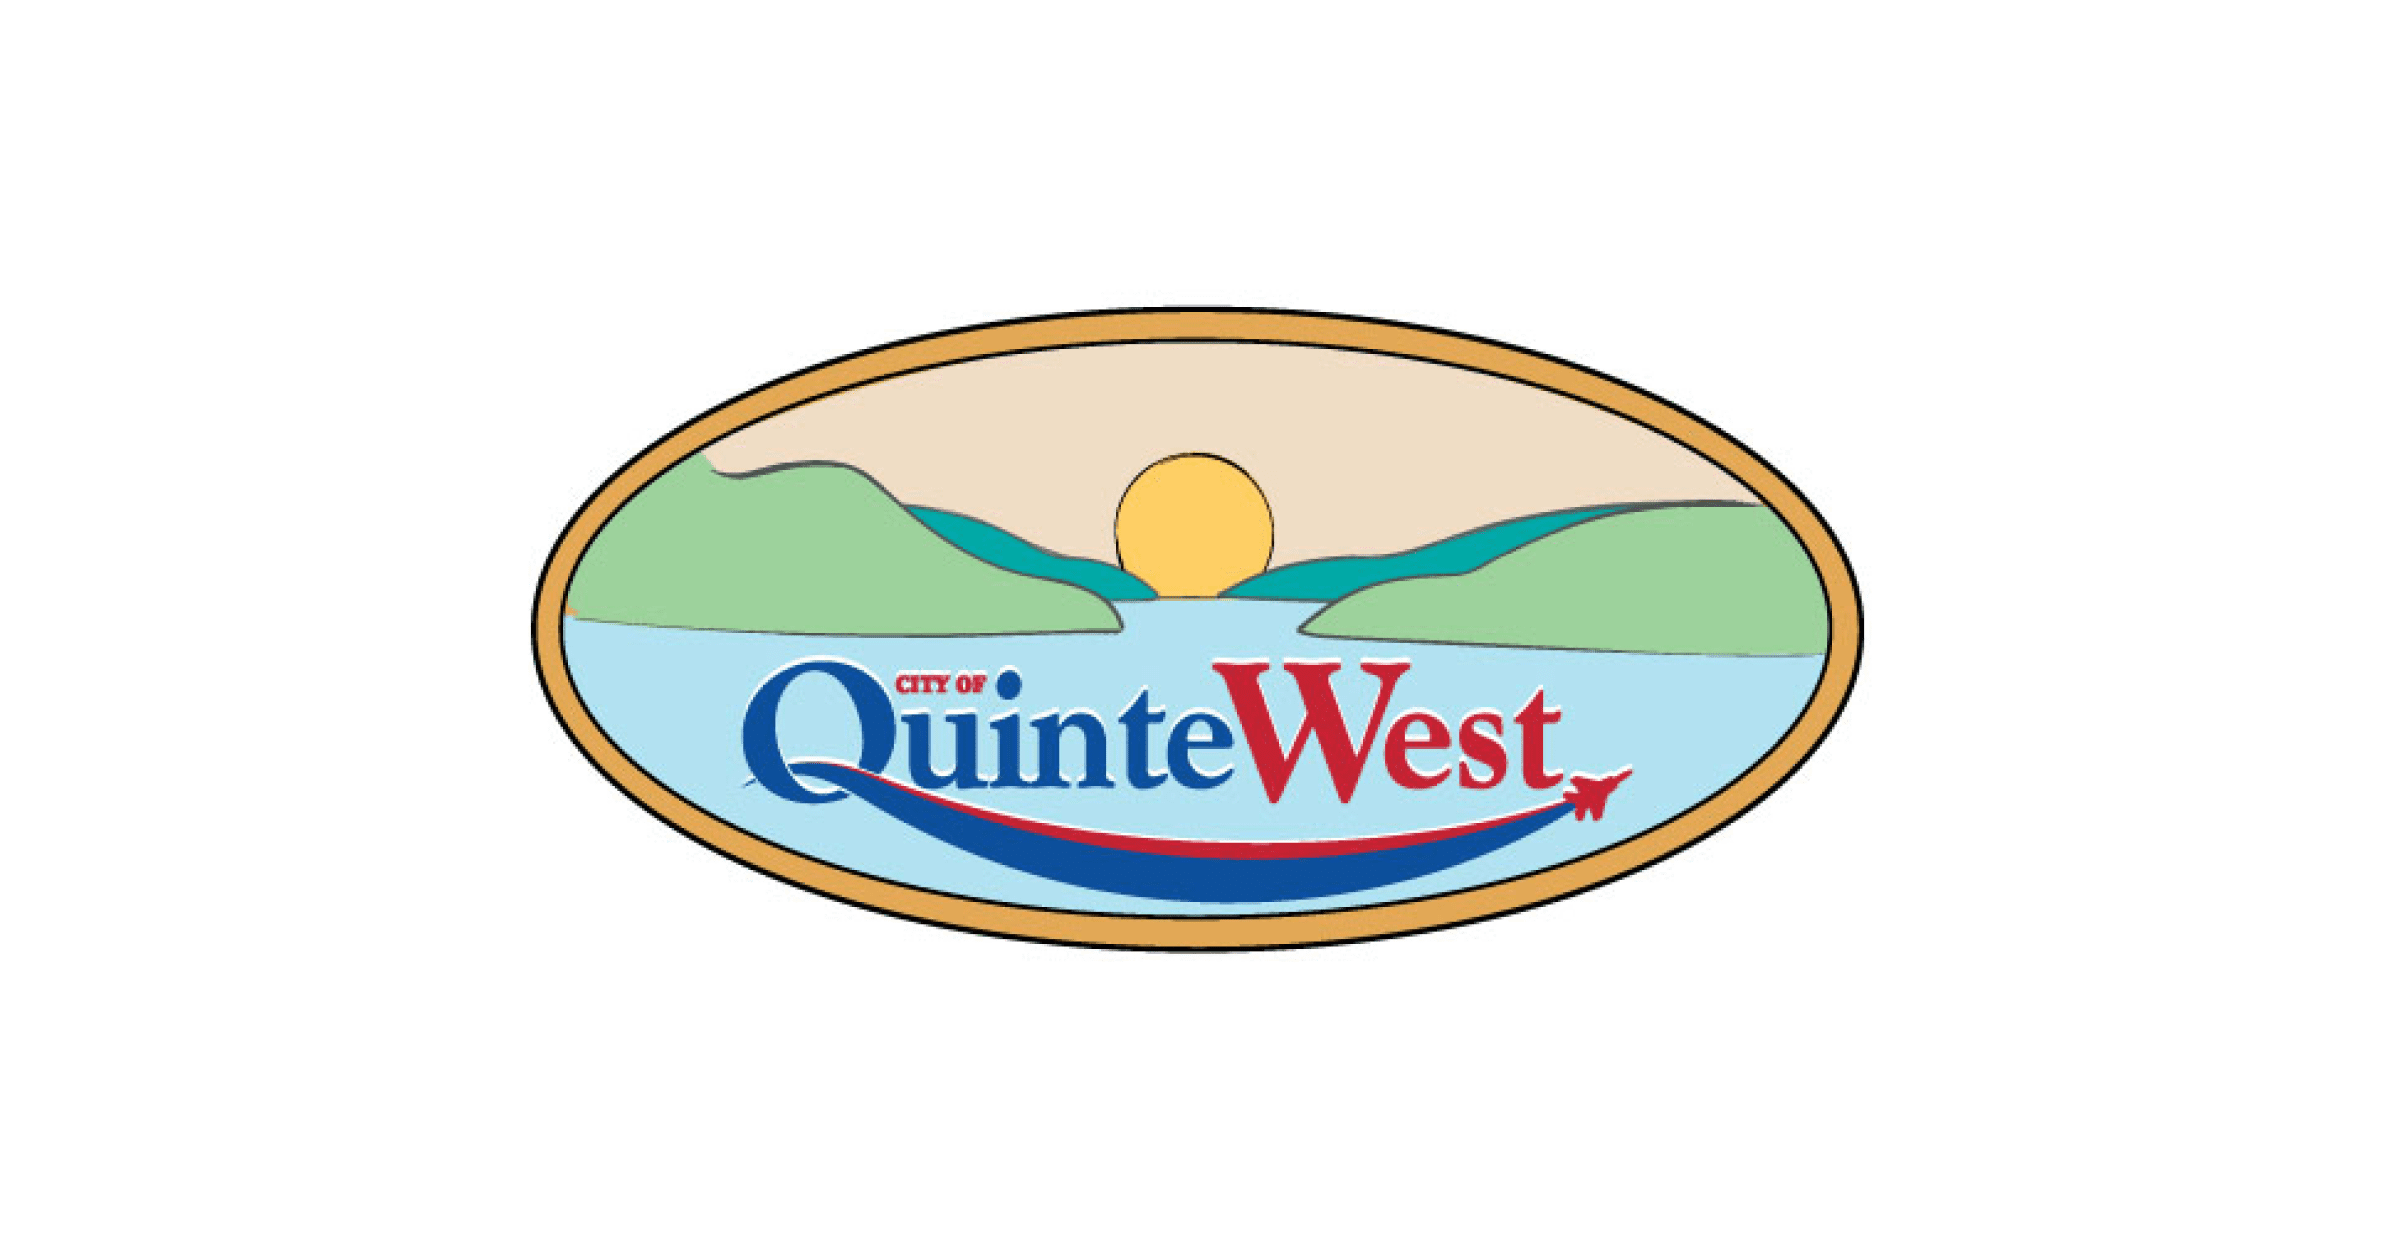 City of Quinte West Feature Image